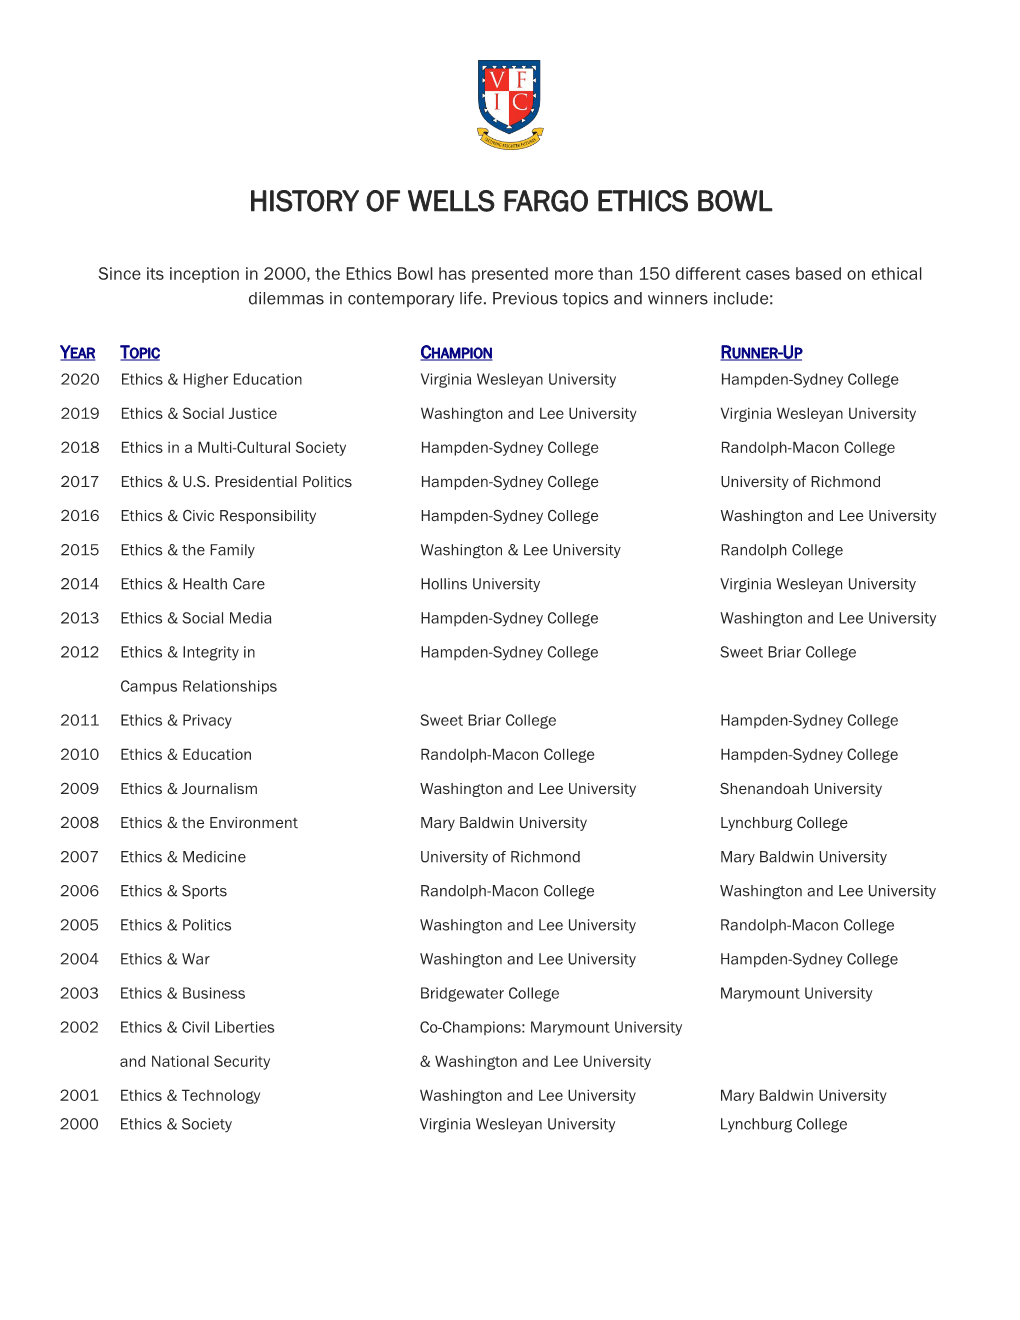 History of Wells Fargo Ethics Bowl